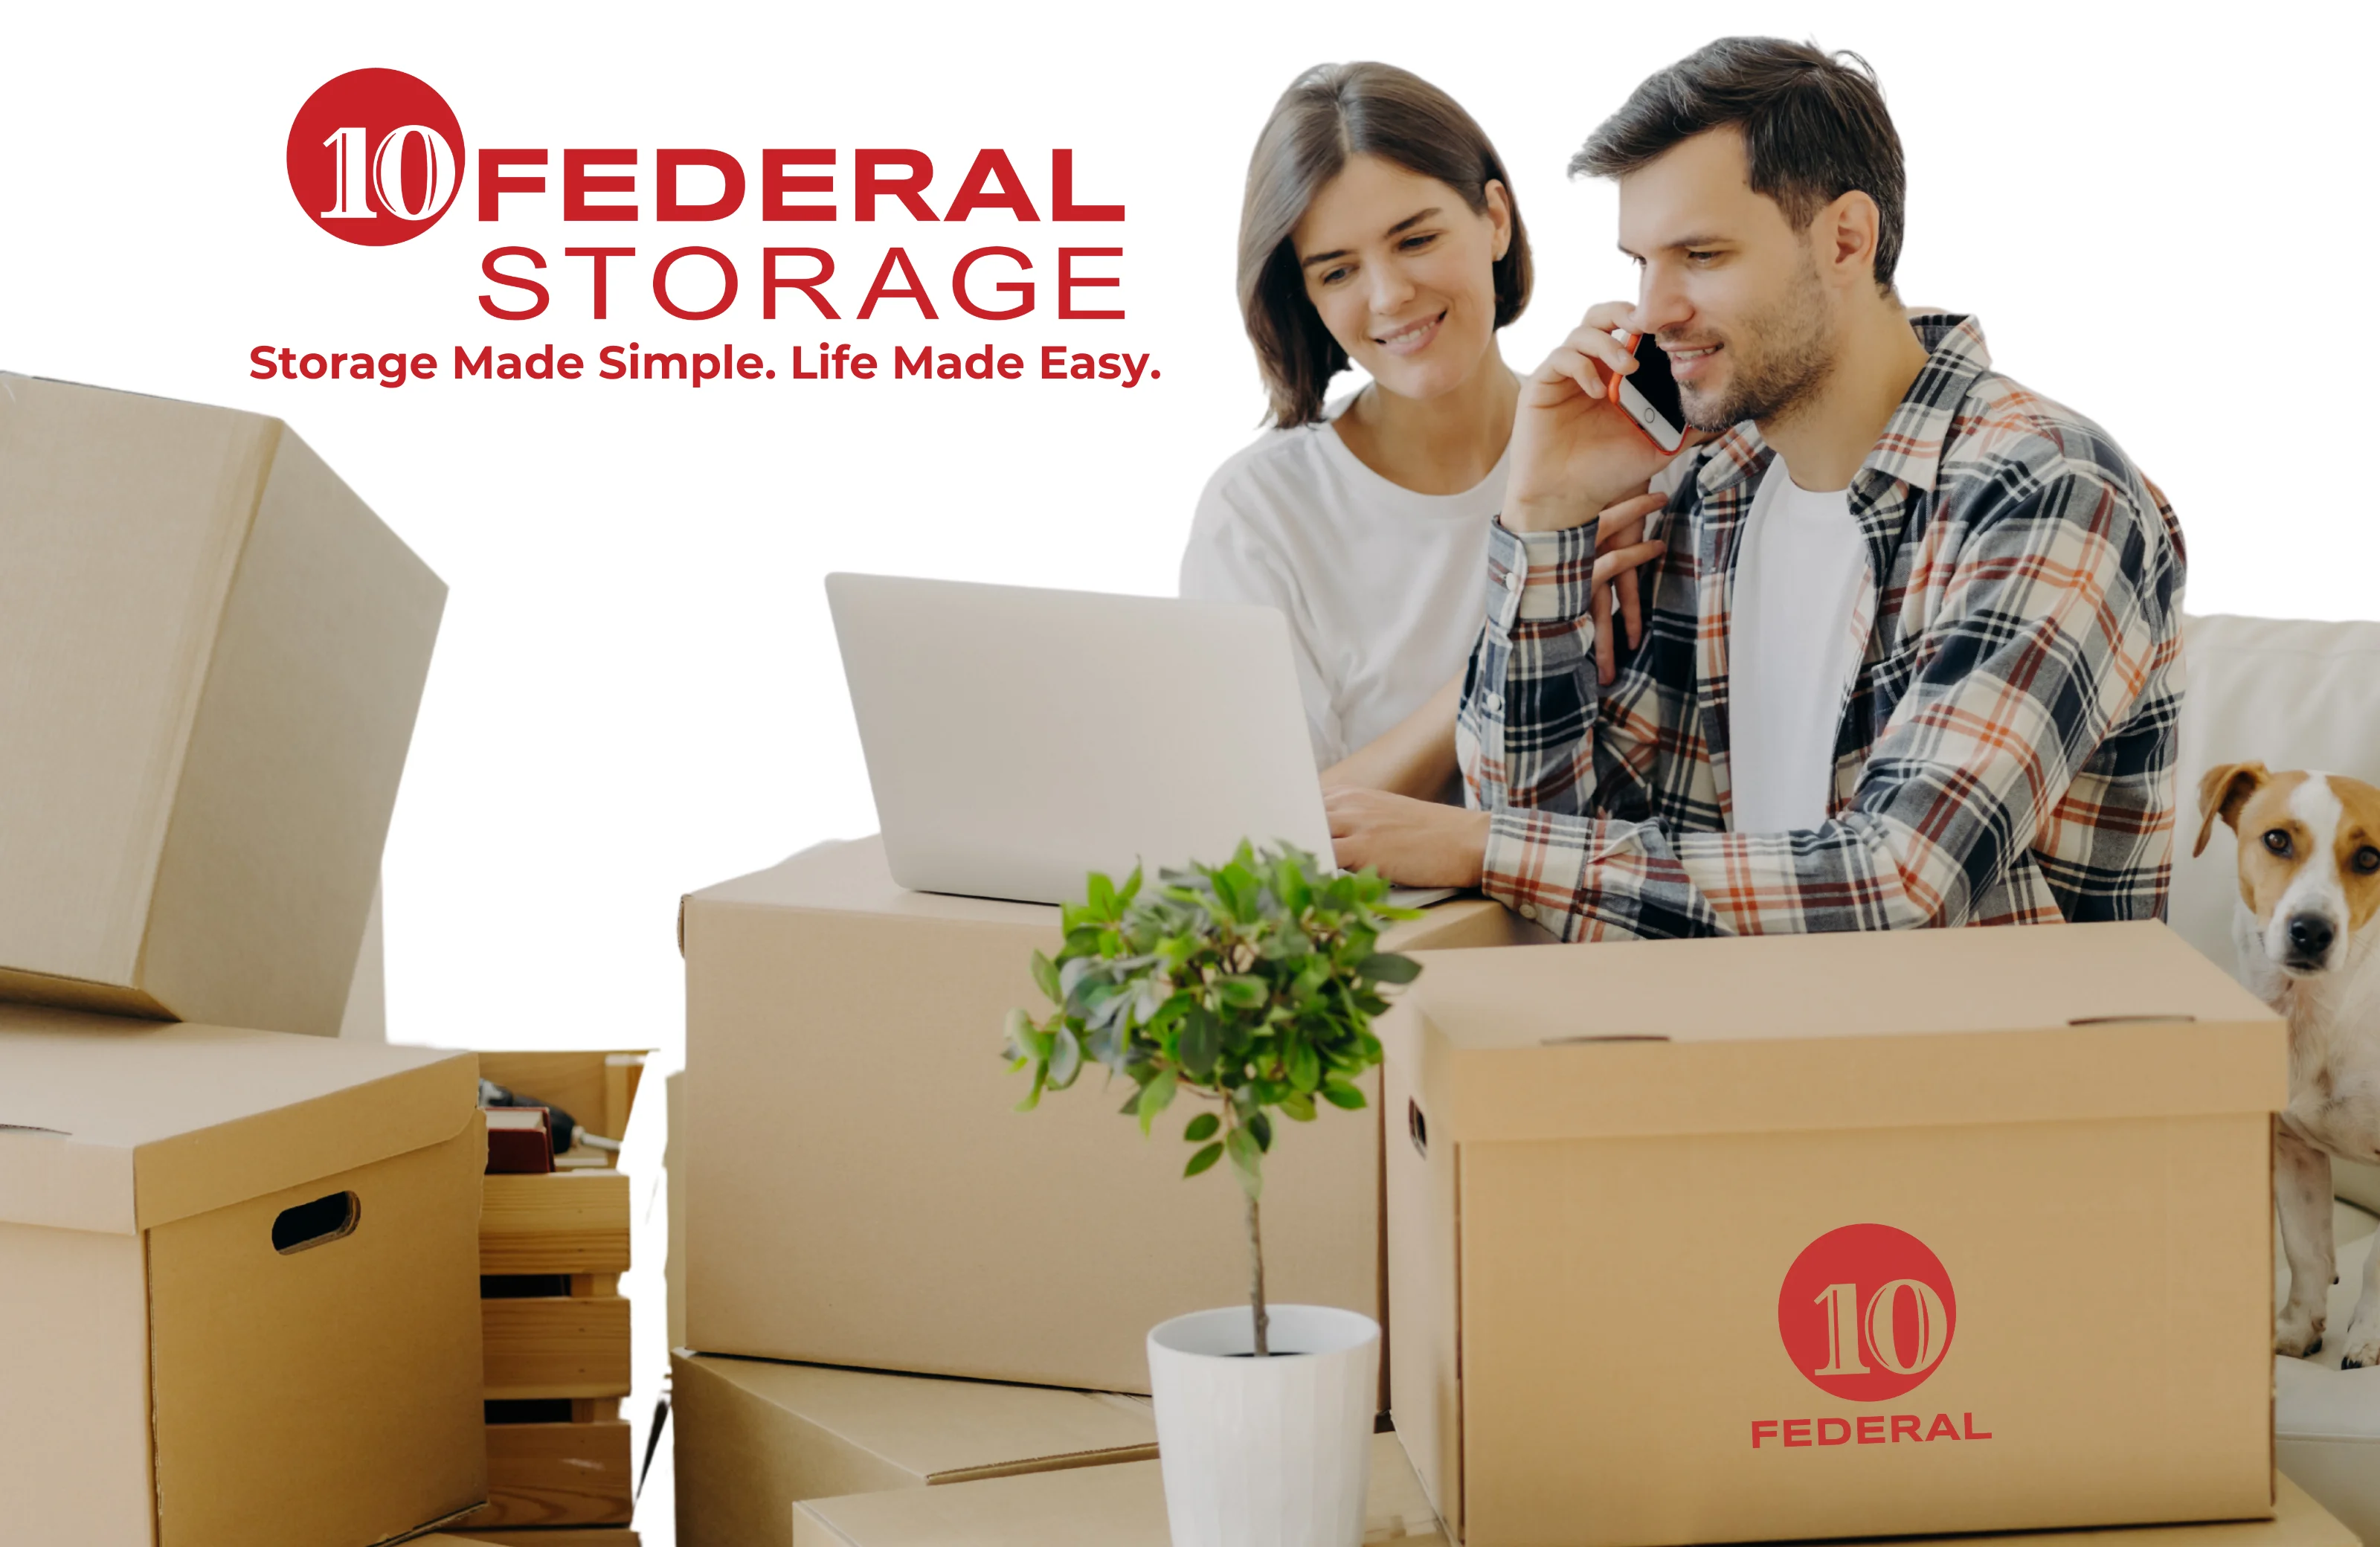 10 federal storage self storage features